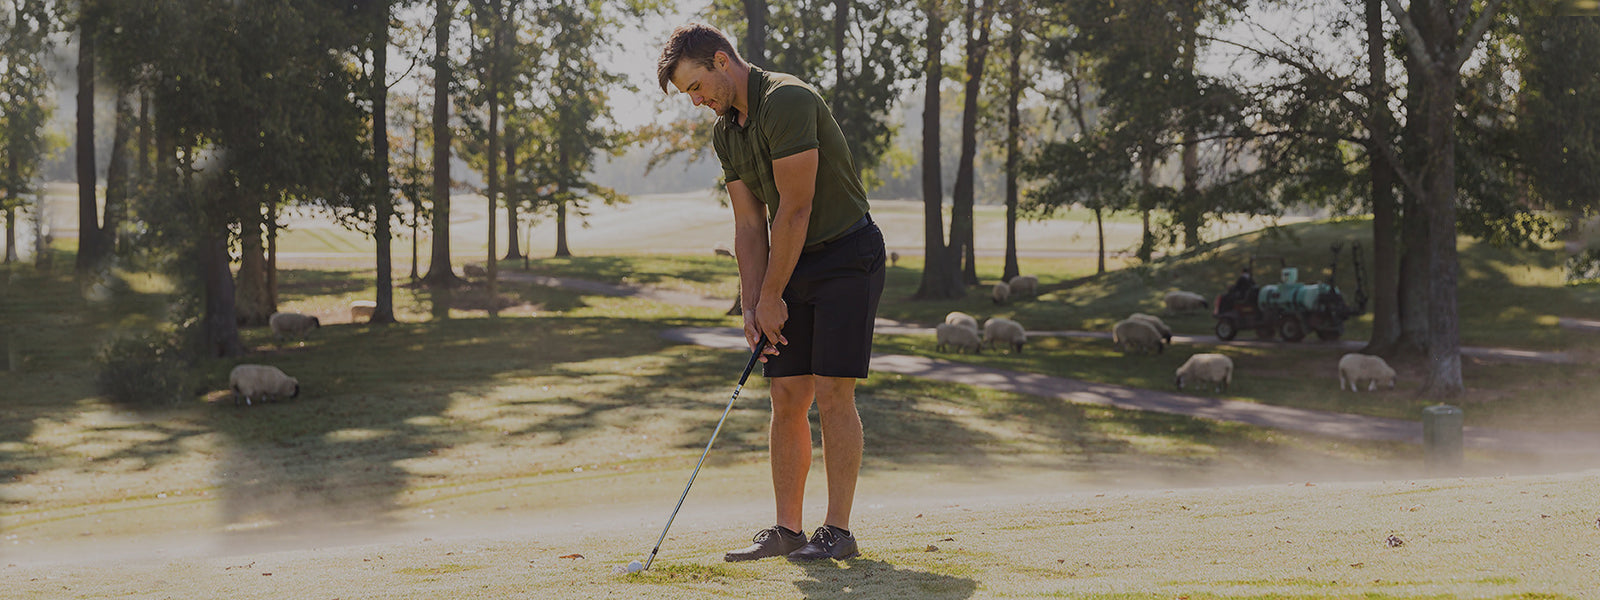 Men's Golf Socks header image, man playing golf